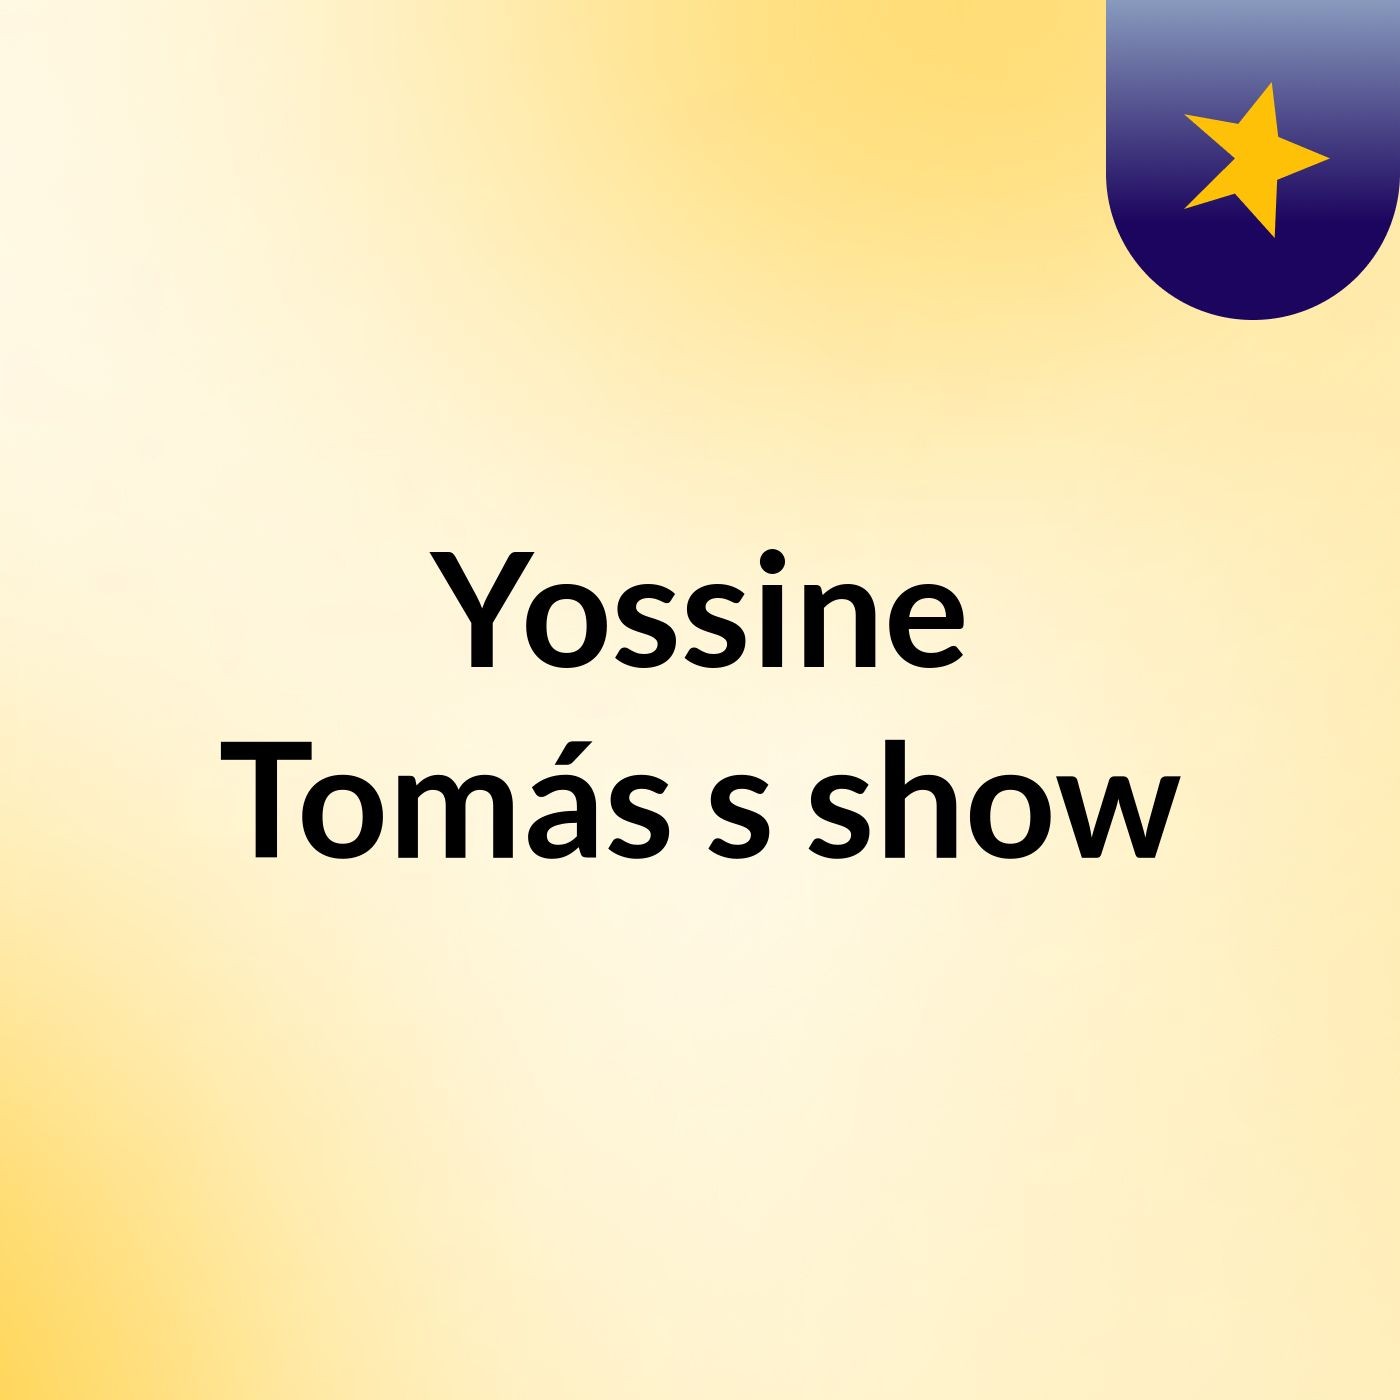 Yossine Tomás's show